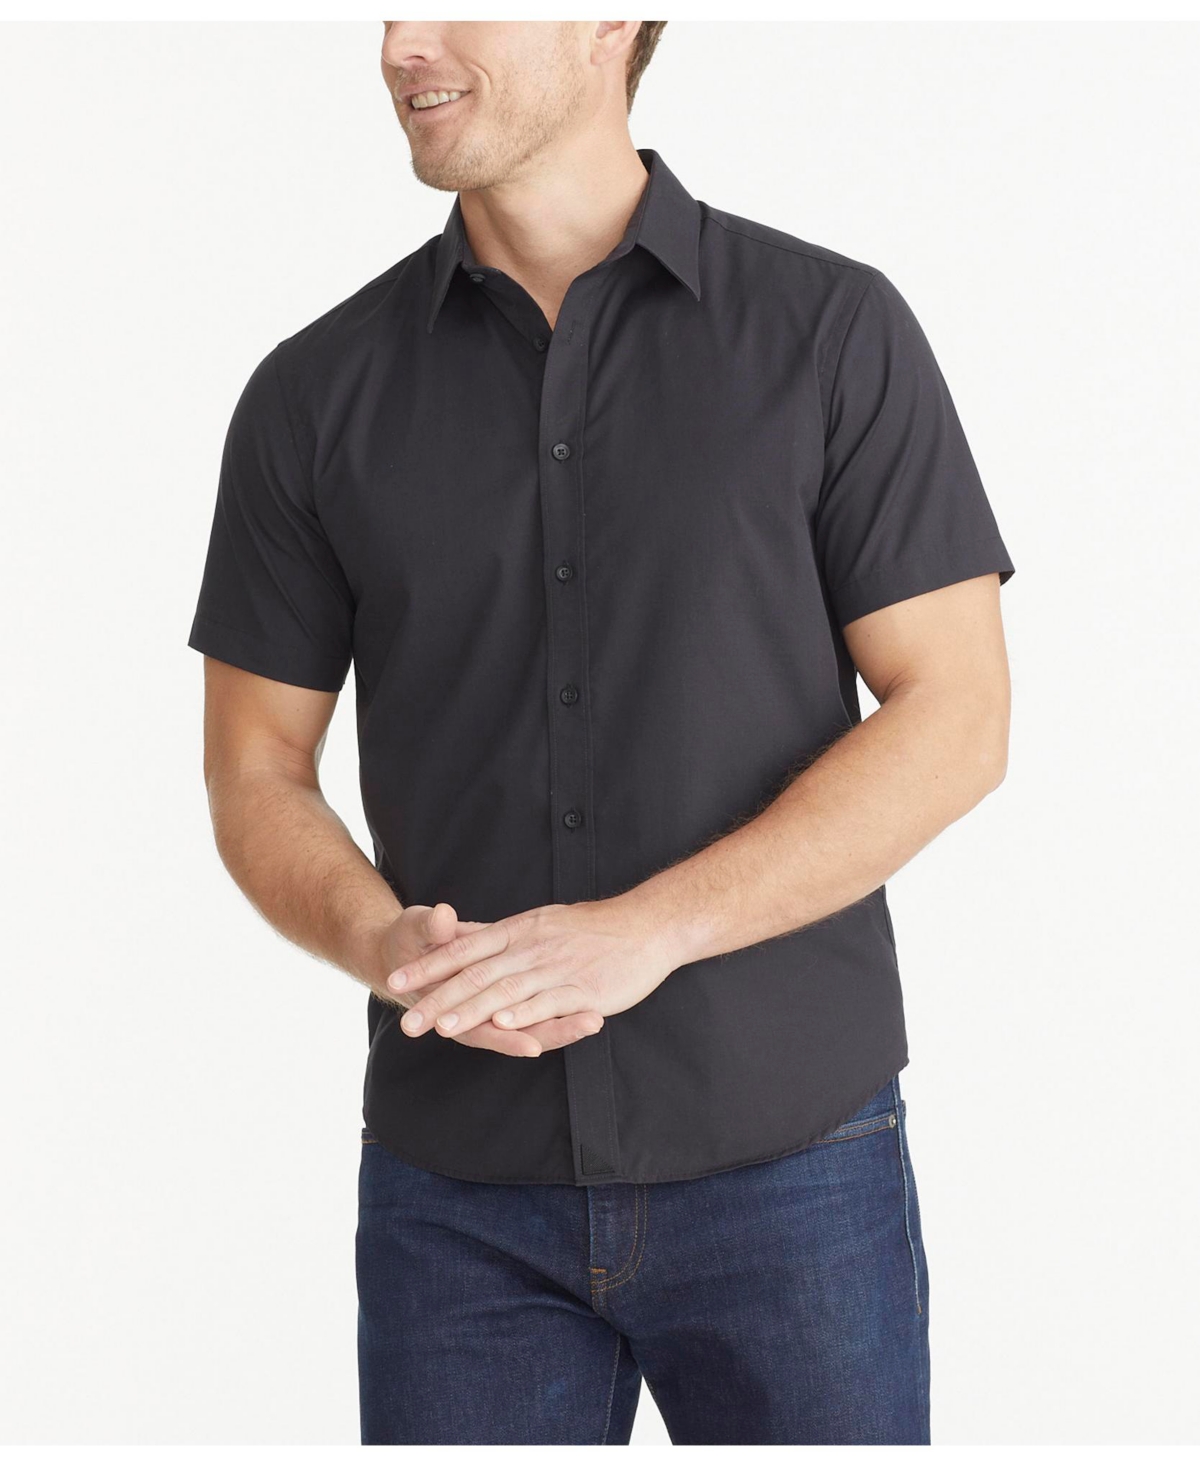 Men's Classic Short-Sleeve Coufran Button Up Shirt - Black